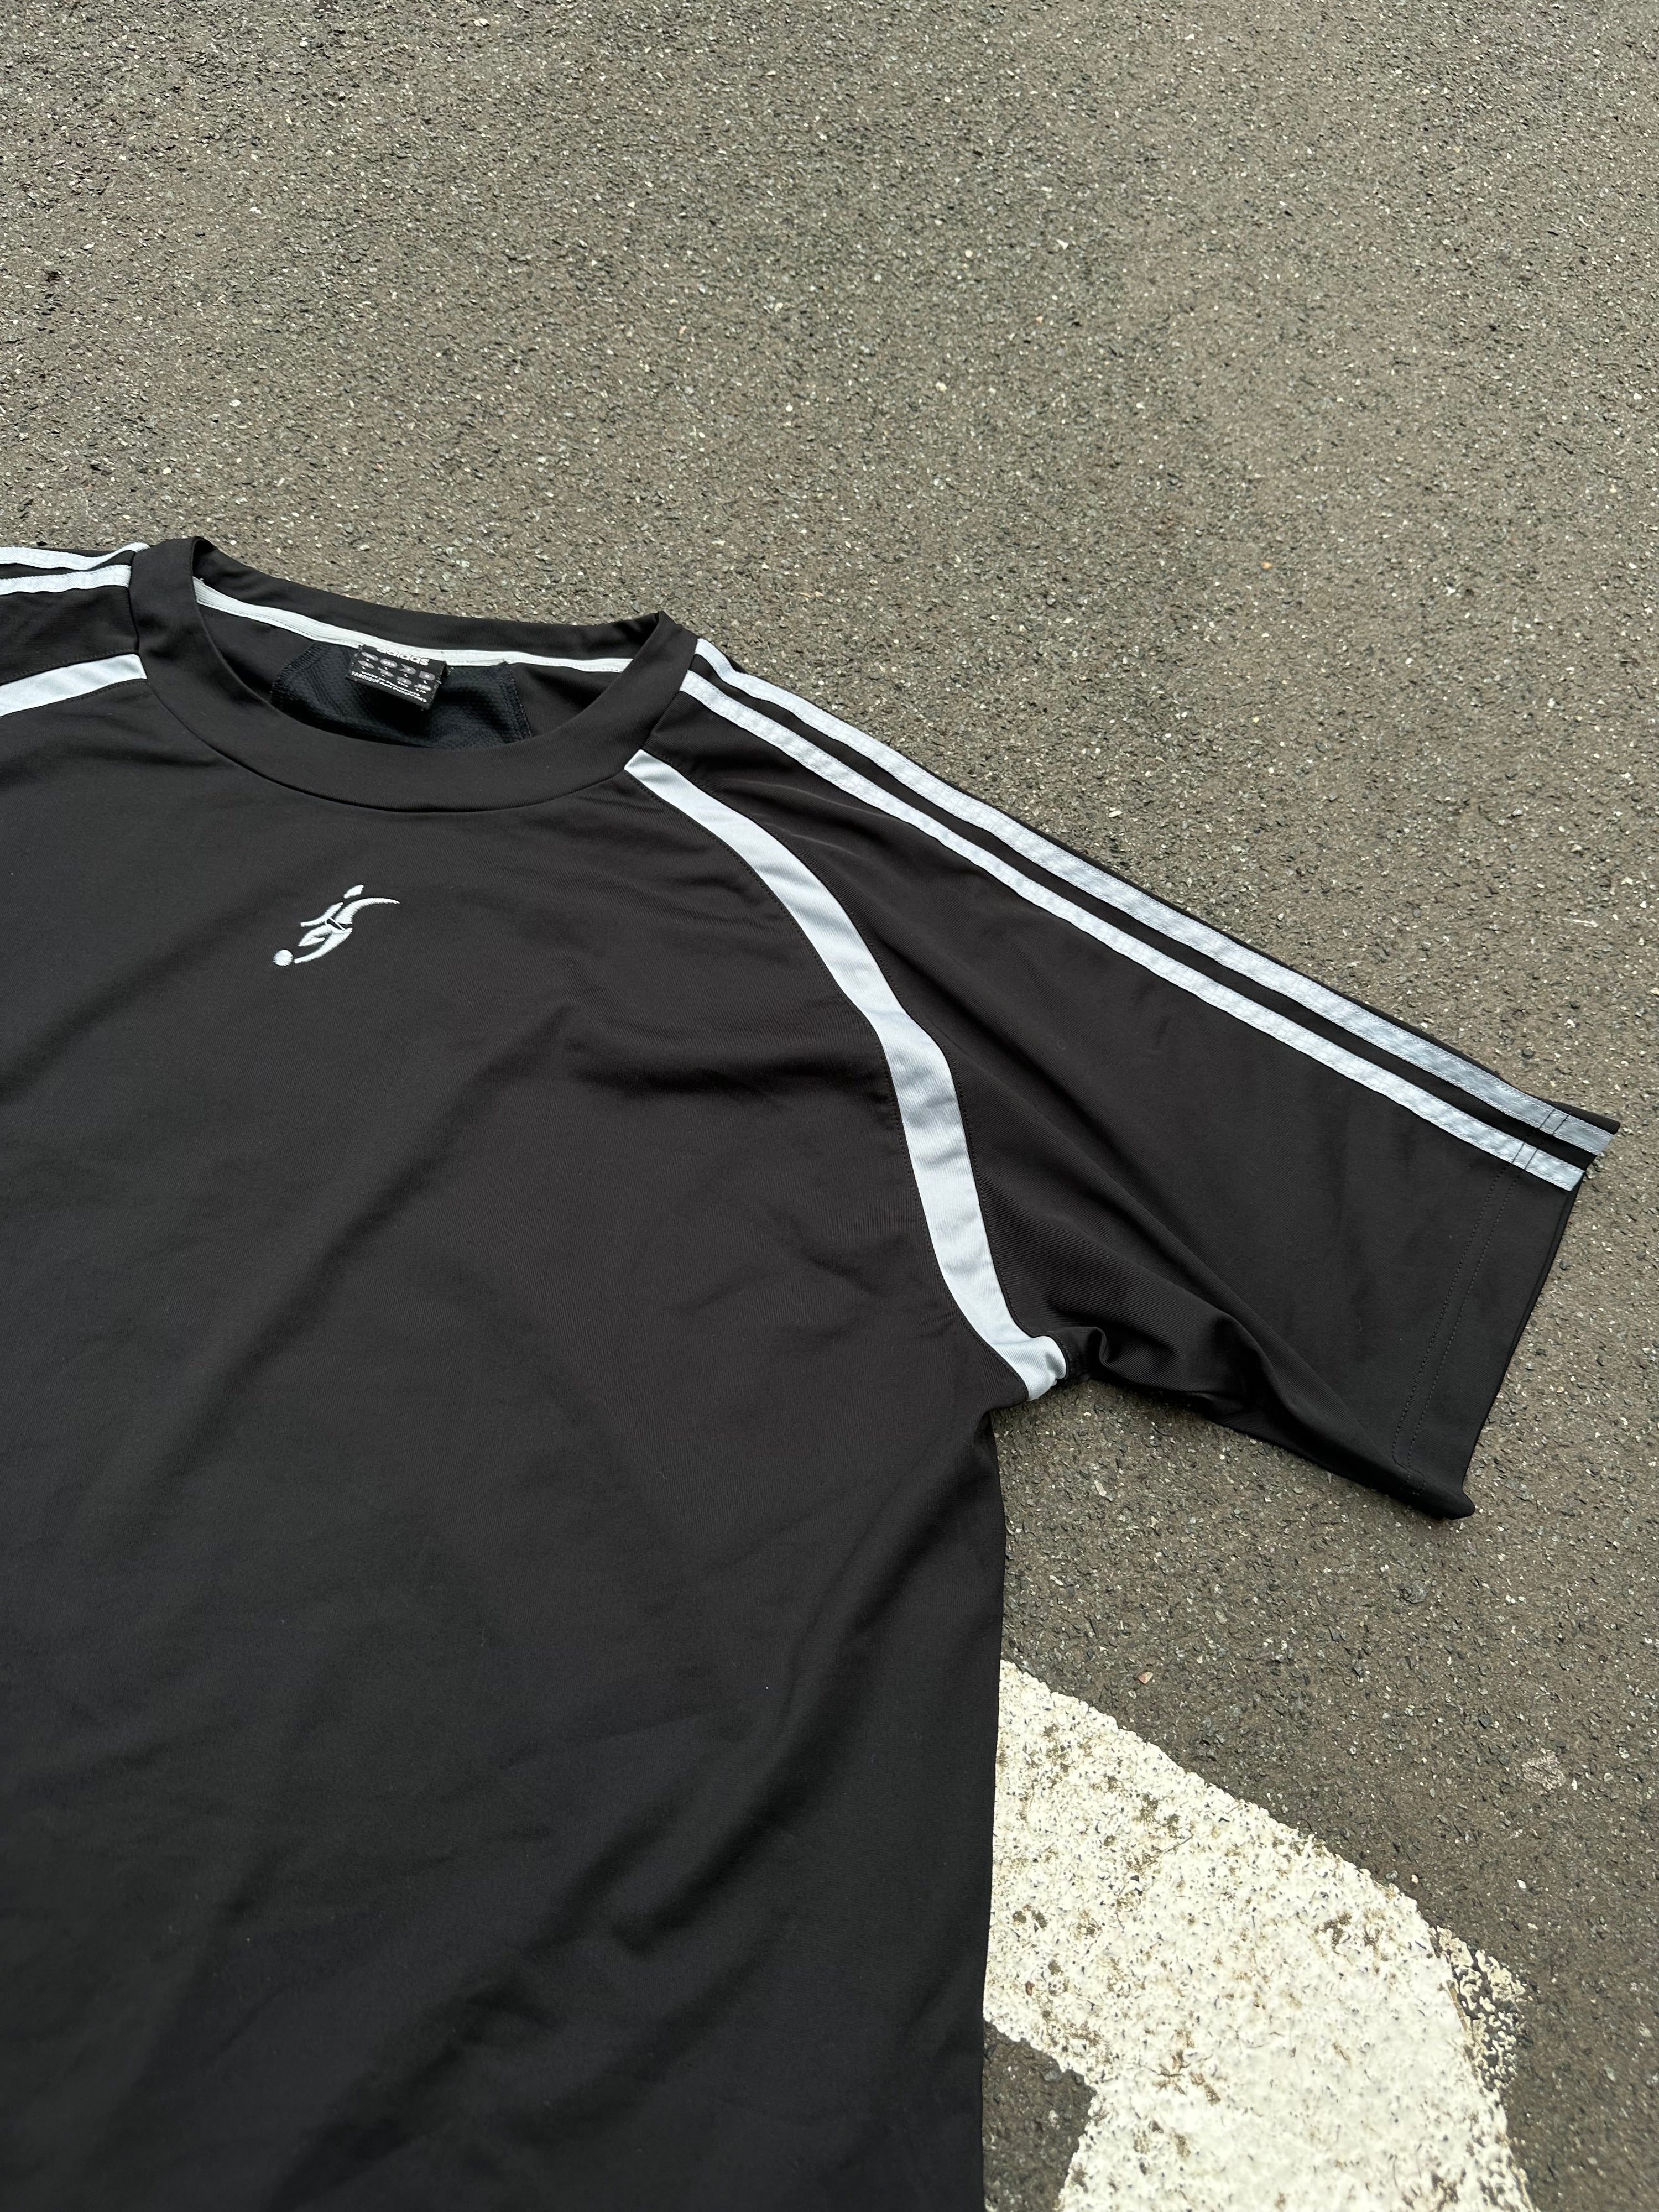 2000s Adidas Dragon Shirt (L)